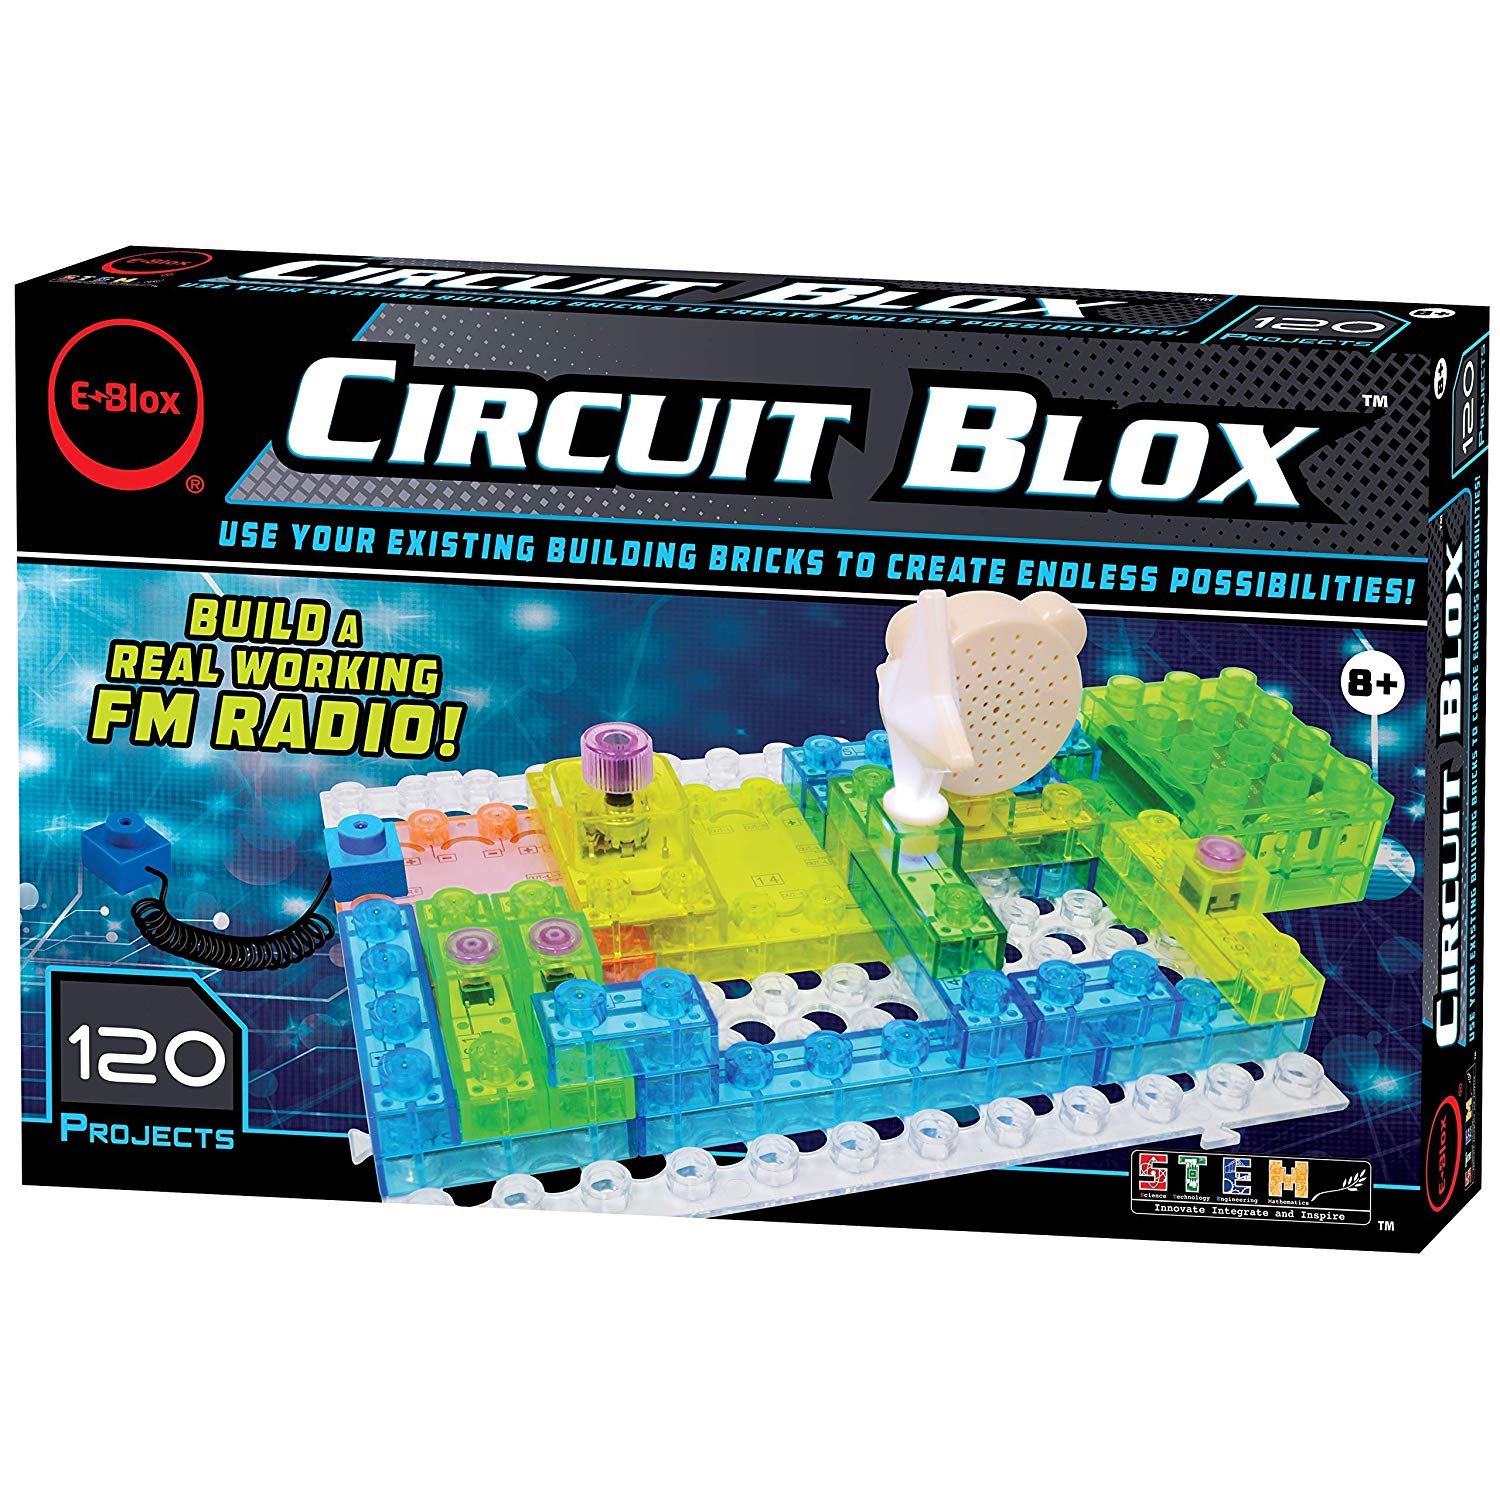 Circuit Blox 120 - E-Blox Circuit Board Building Kit